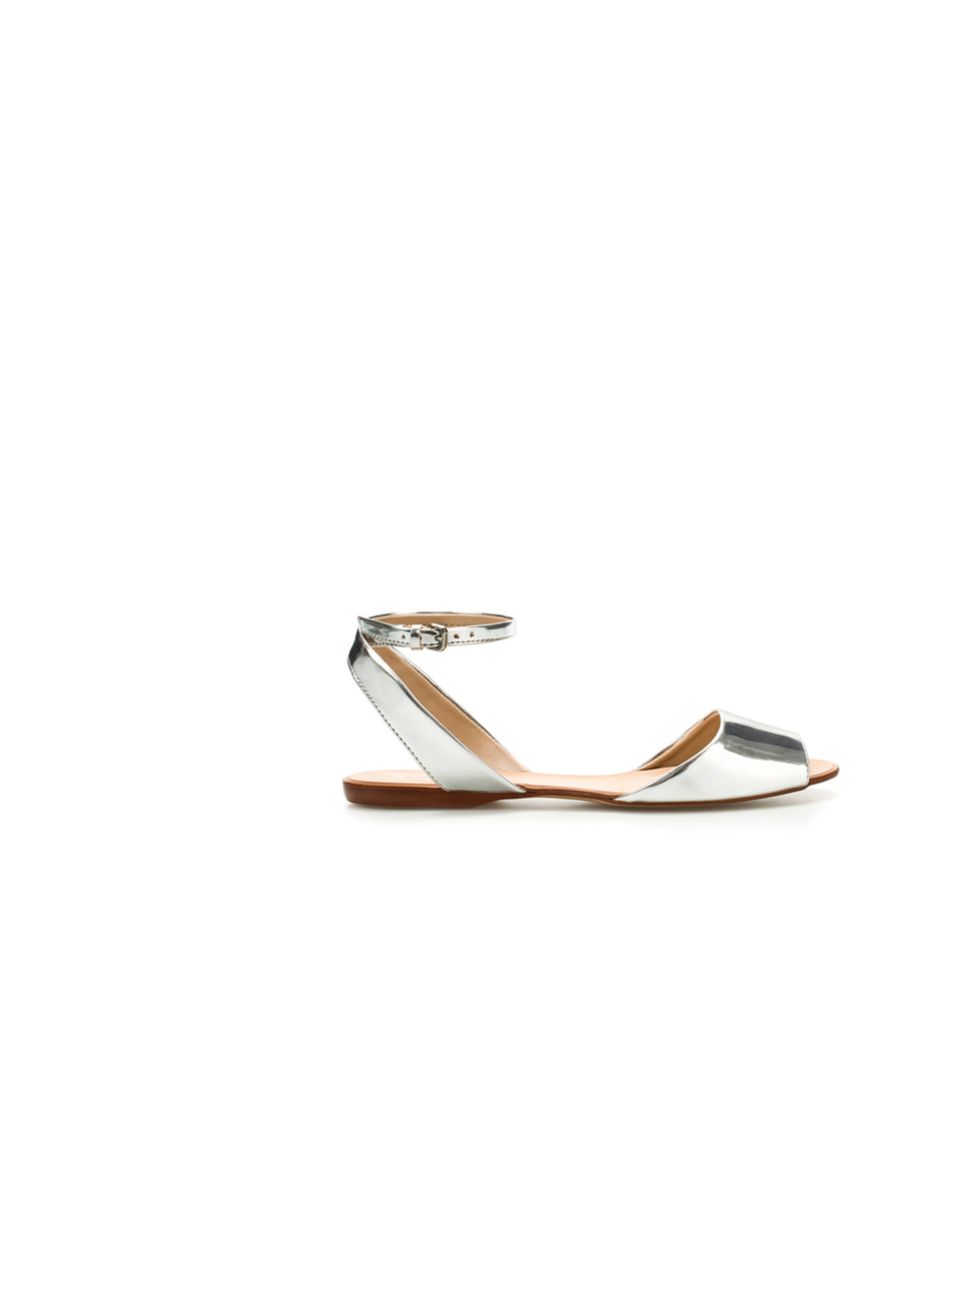 <p>Zara metallic sandals, <a href="http://www.zara.com/webapp/wcs/stores/servlet/product/uk/en/zara-S2012/189510/778041/BASIC%2BSANDAL">£29.99</a></p>